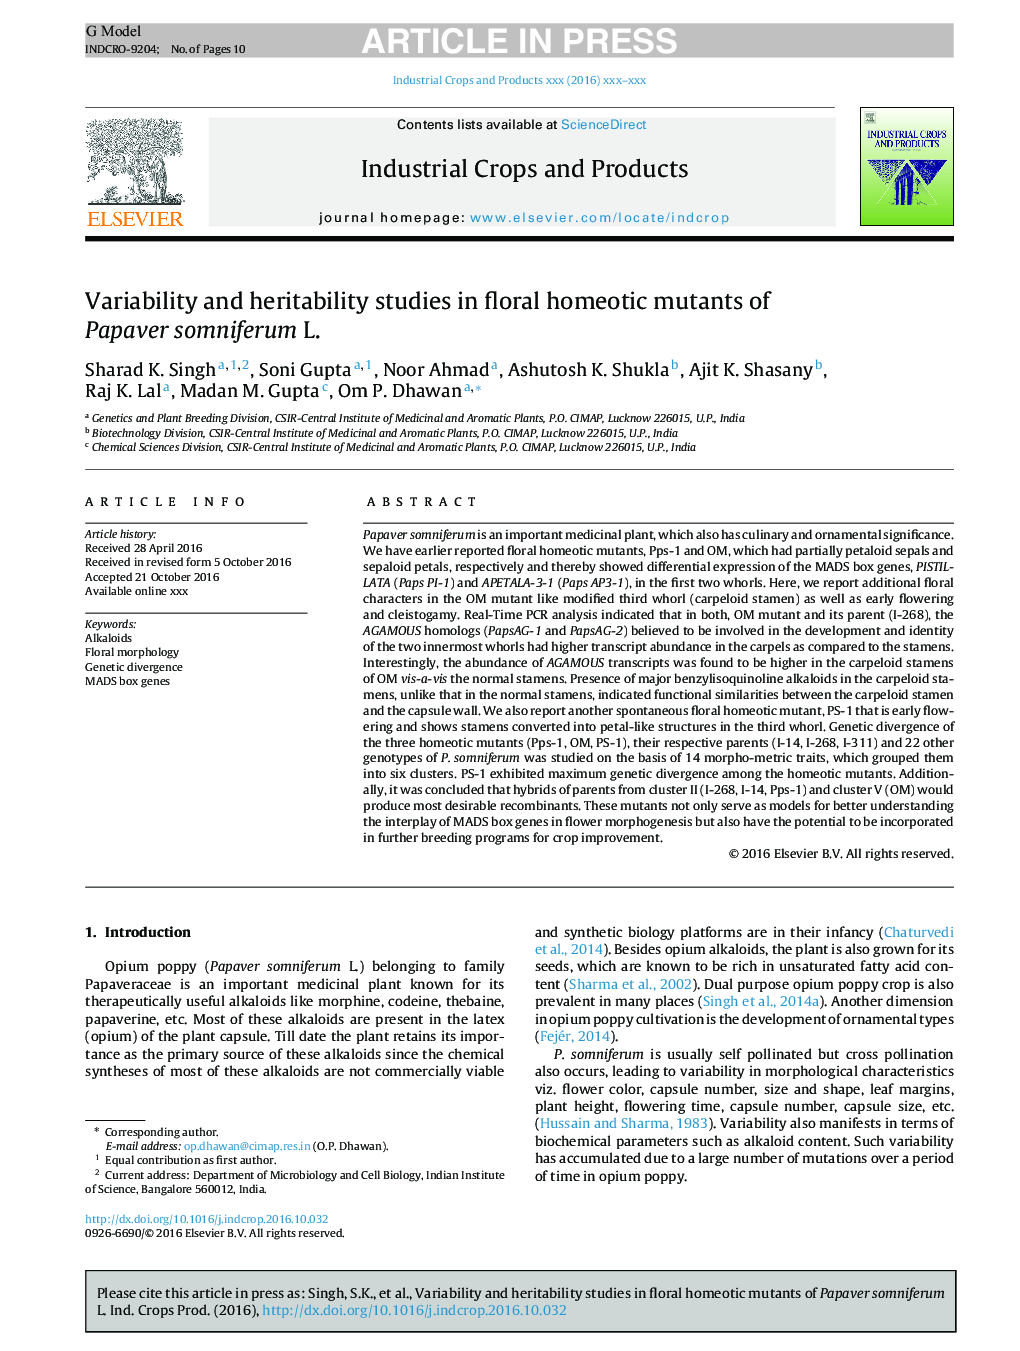 Variability and heritability studies in floral homeotic mutants of Papaver somniferum L.